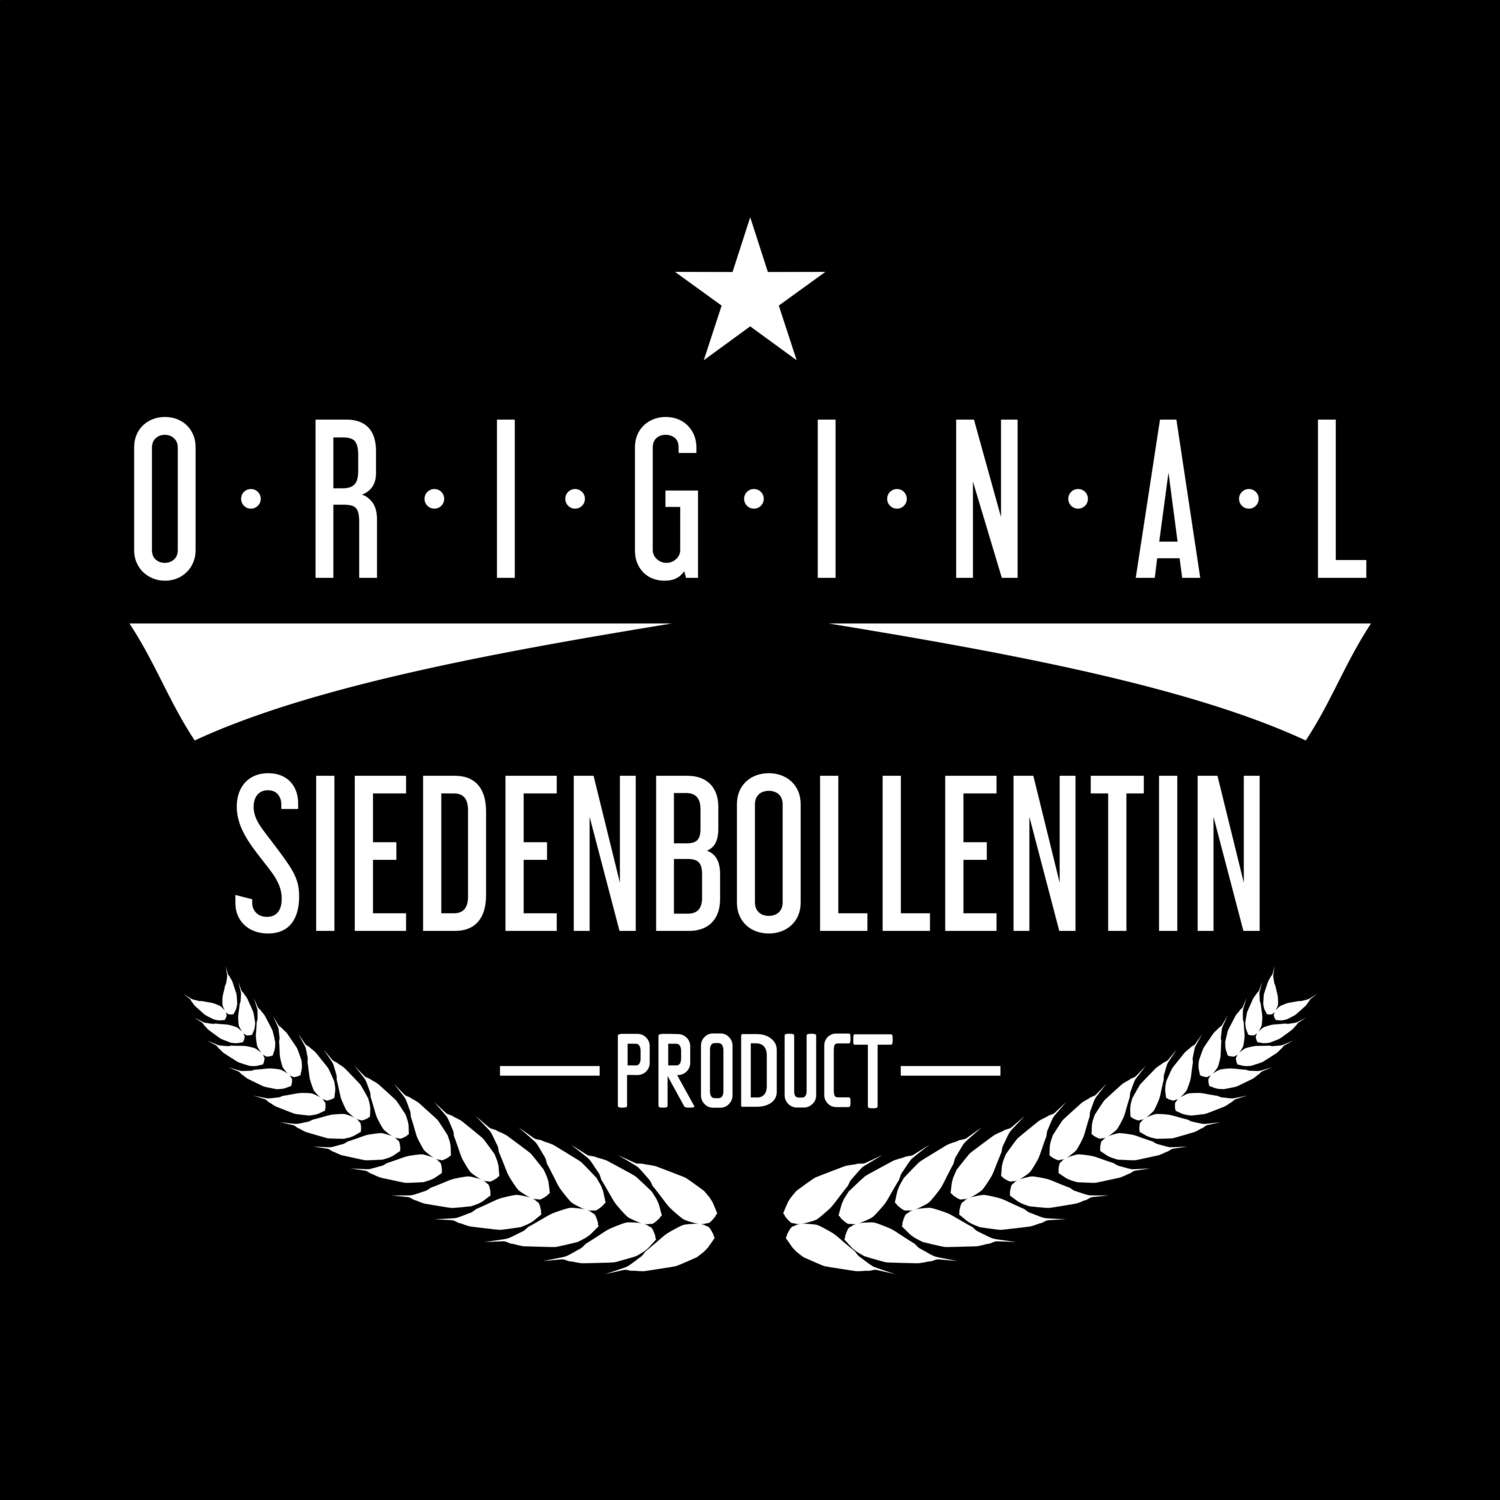 Siedenbollentin T-Shirt »Original Product«